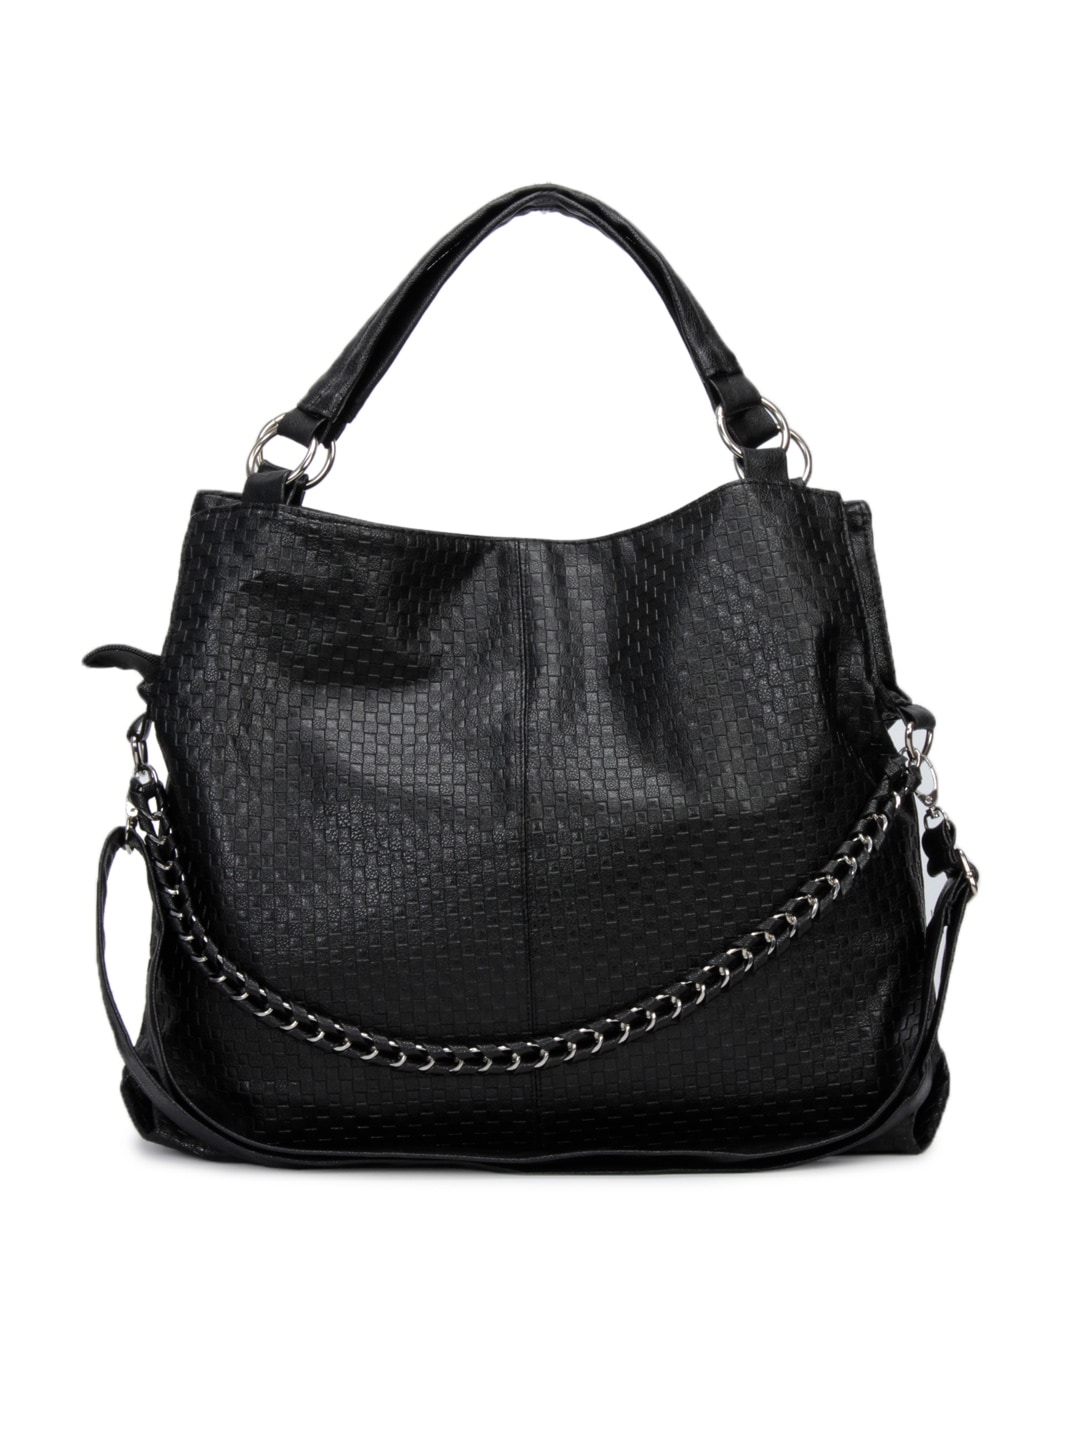 Lino Perros Women Black Handbag